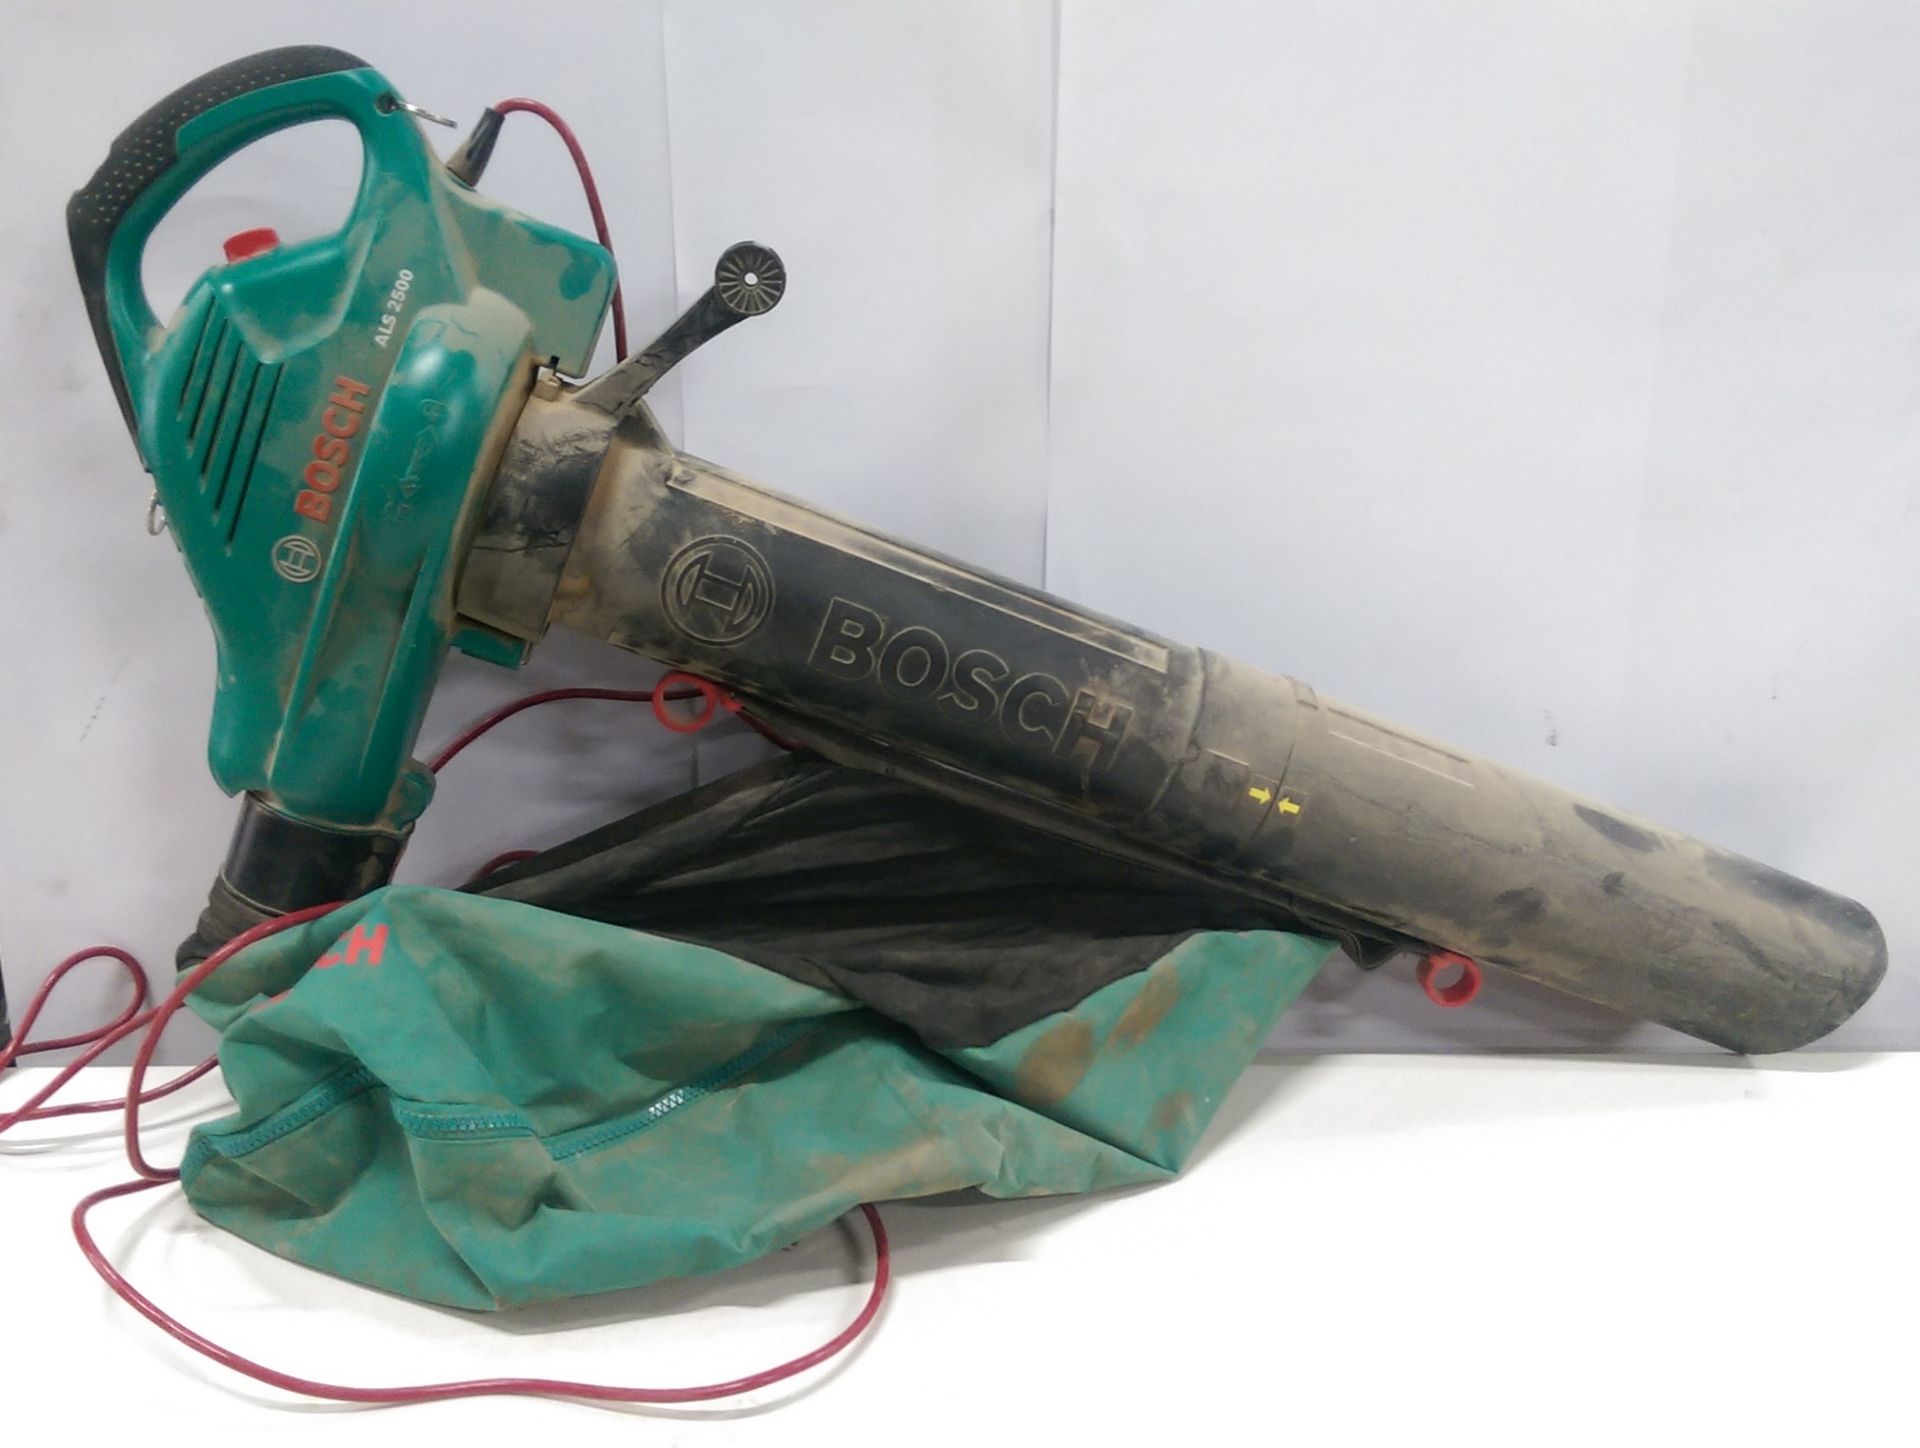 Bosch ALS 2500 Electric Garden Blower and Vacuum